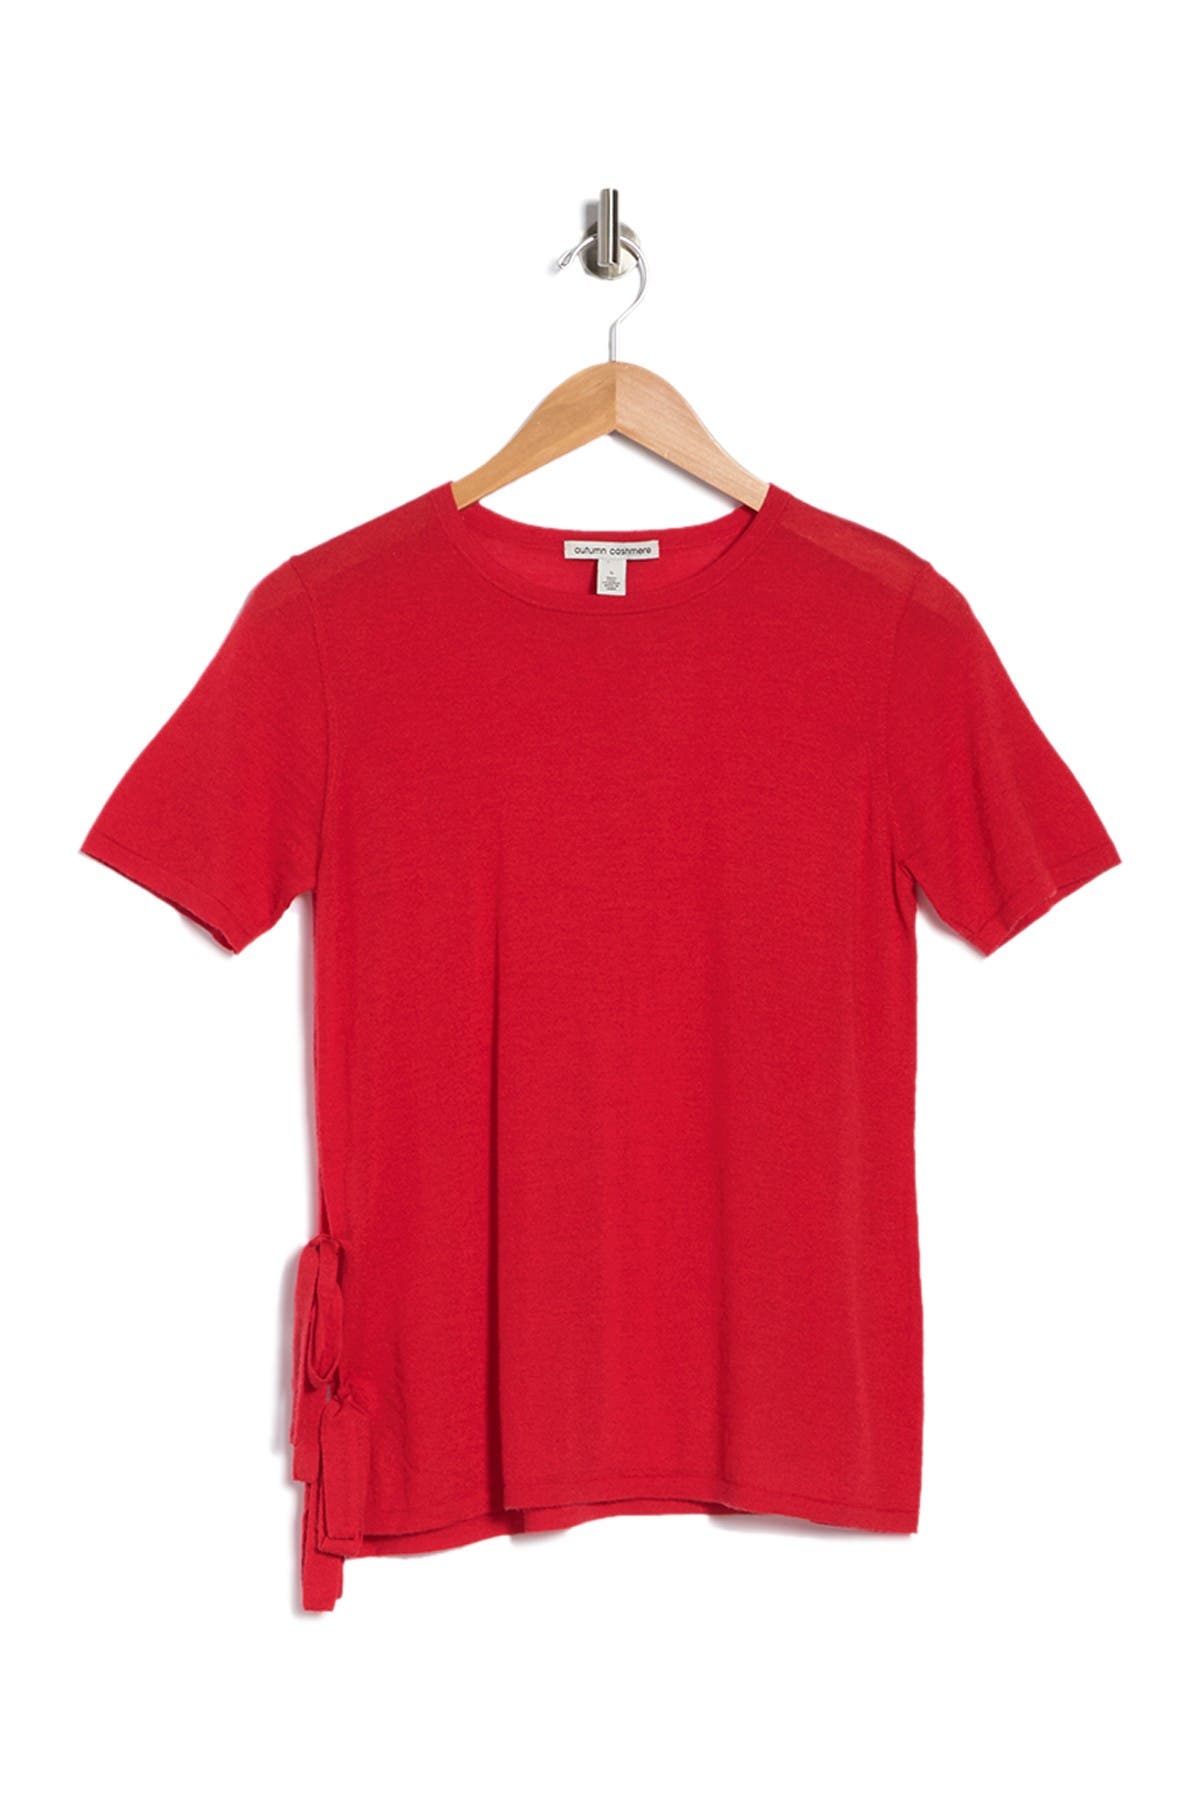 Autumn Cashmere Tie Side Cashmere T-shirt In Medium Red6